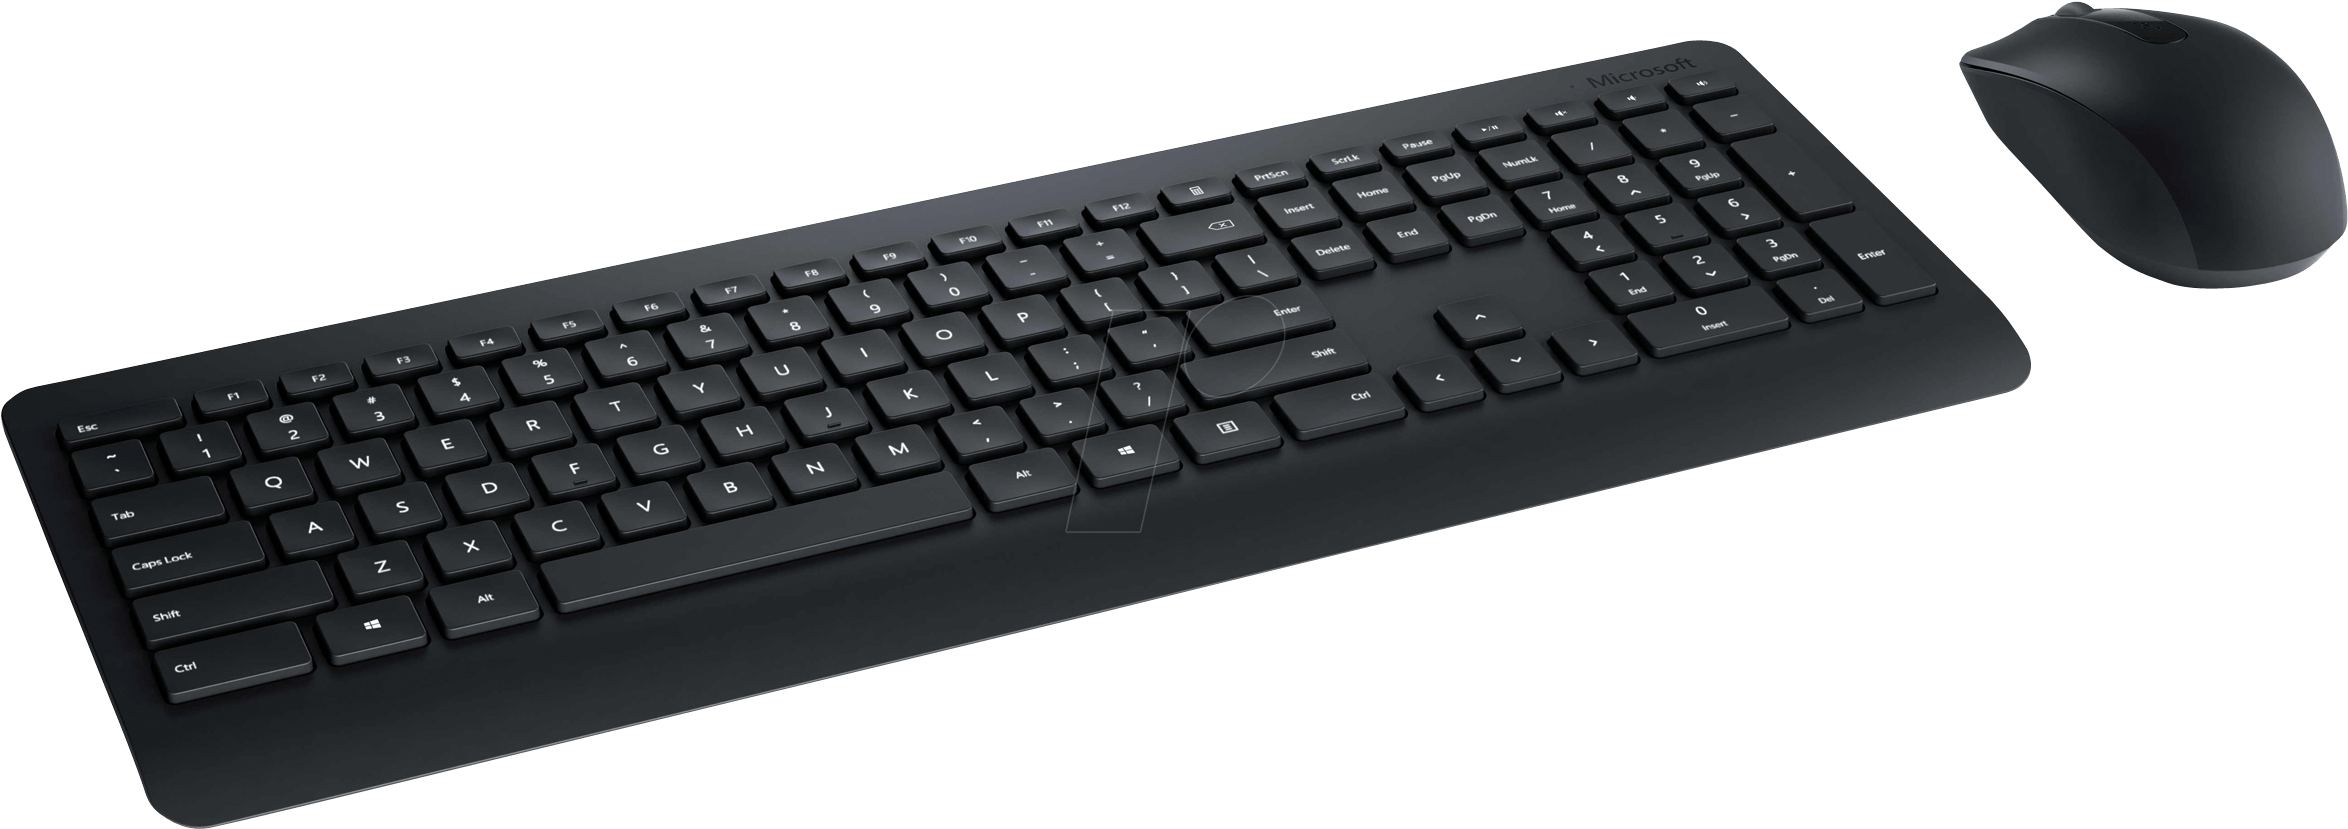 Aes Microsoft Pt3 - Microsoft 900 Keyboard (2362x845), Png Download